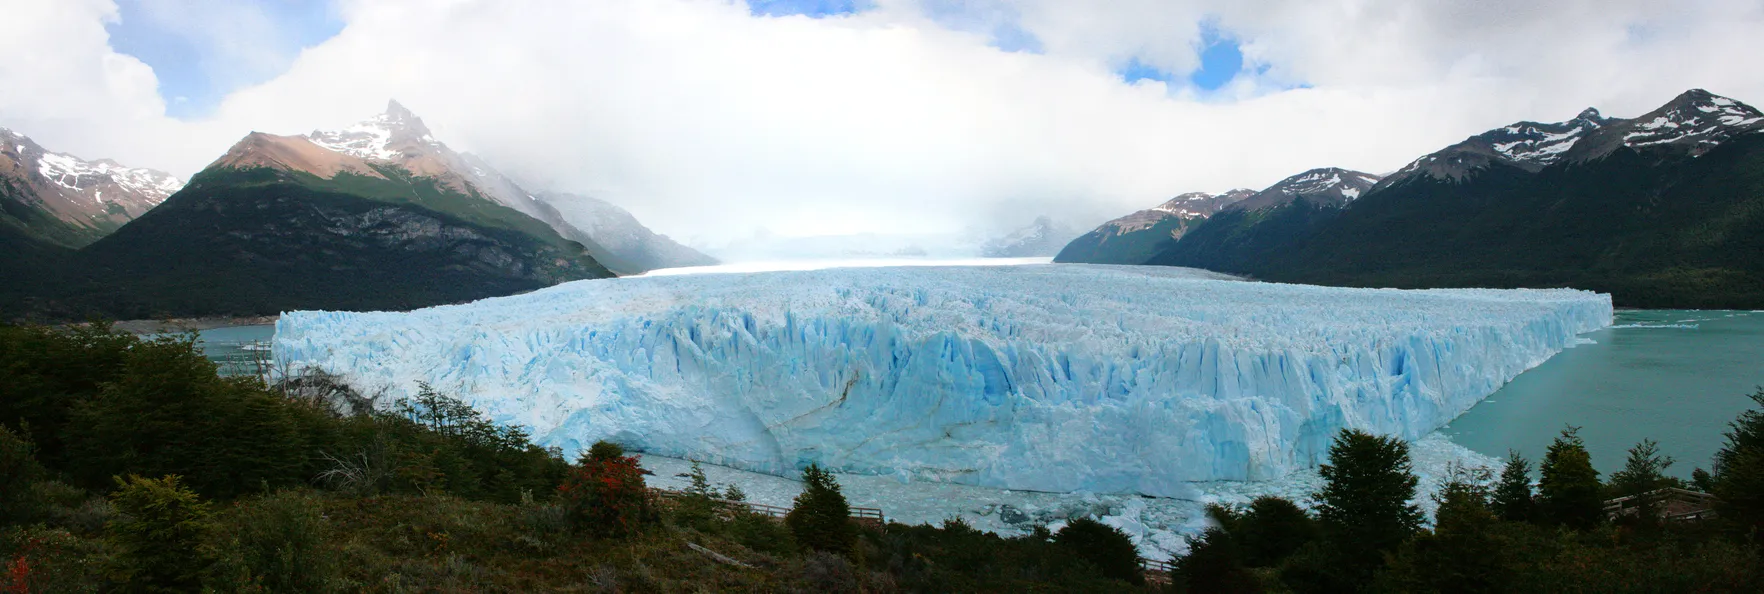 Le Perito Moreno en Patagonie argentine © iStock / ThePianoPlayer